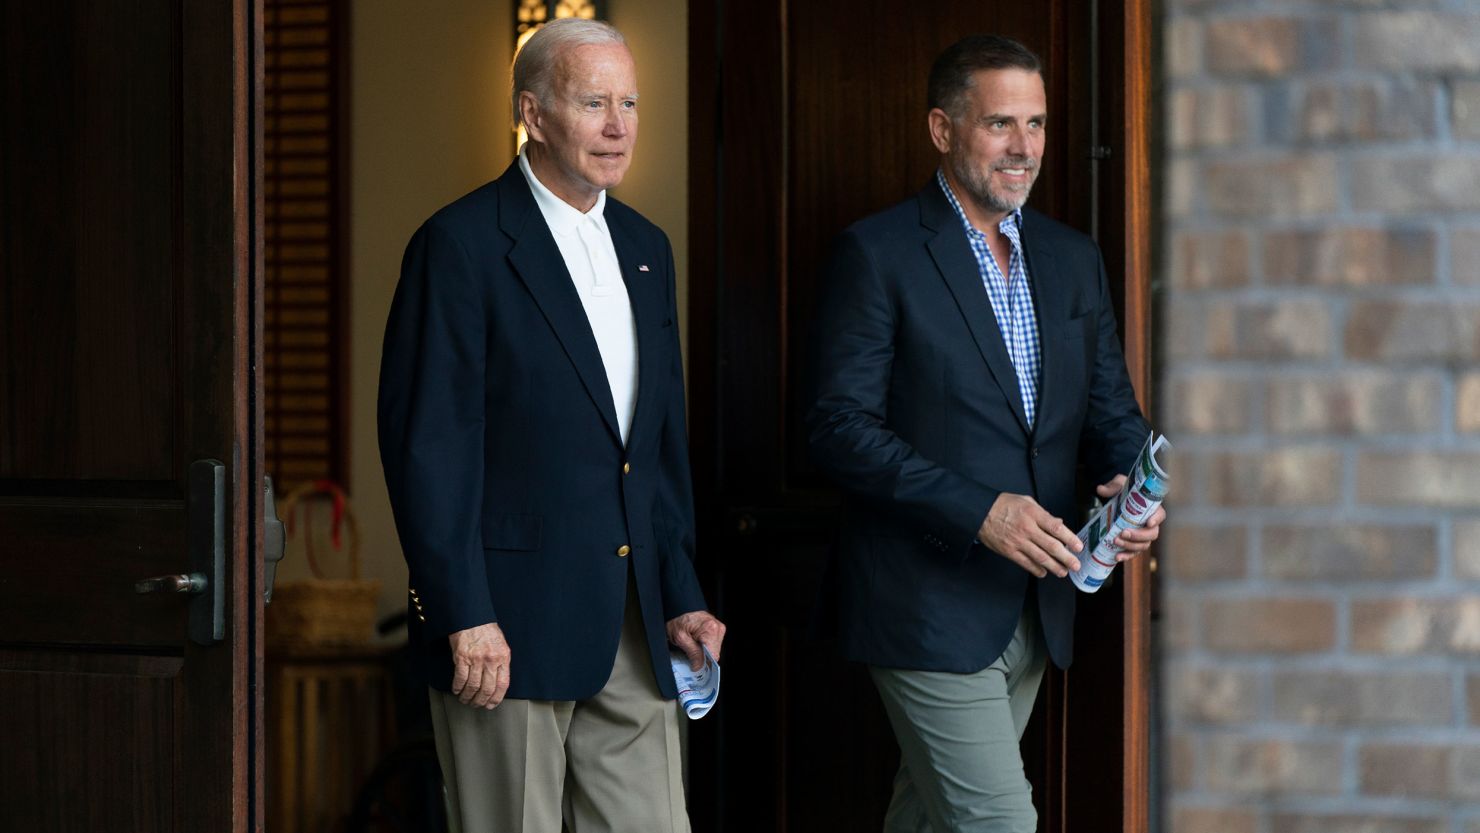 President Joe Biden and his son, Hunter Biden, leave Holy Spirit Catholic Church in Johns Island, SC, on August 13, 2022.